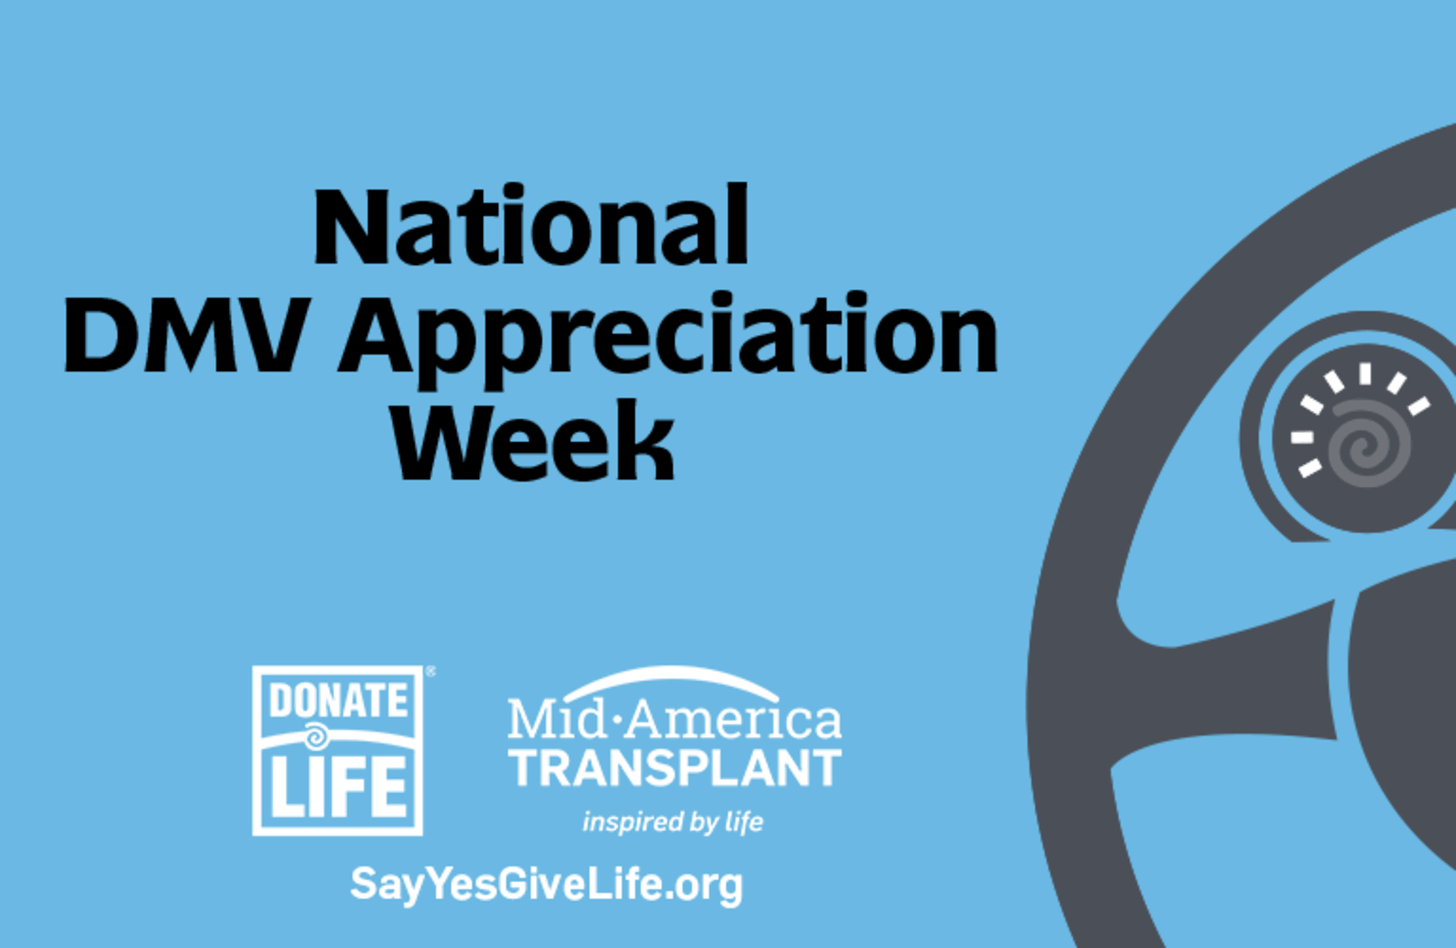 Mid-America Transplant is celebrating National DMV Appreciation Week.